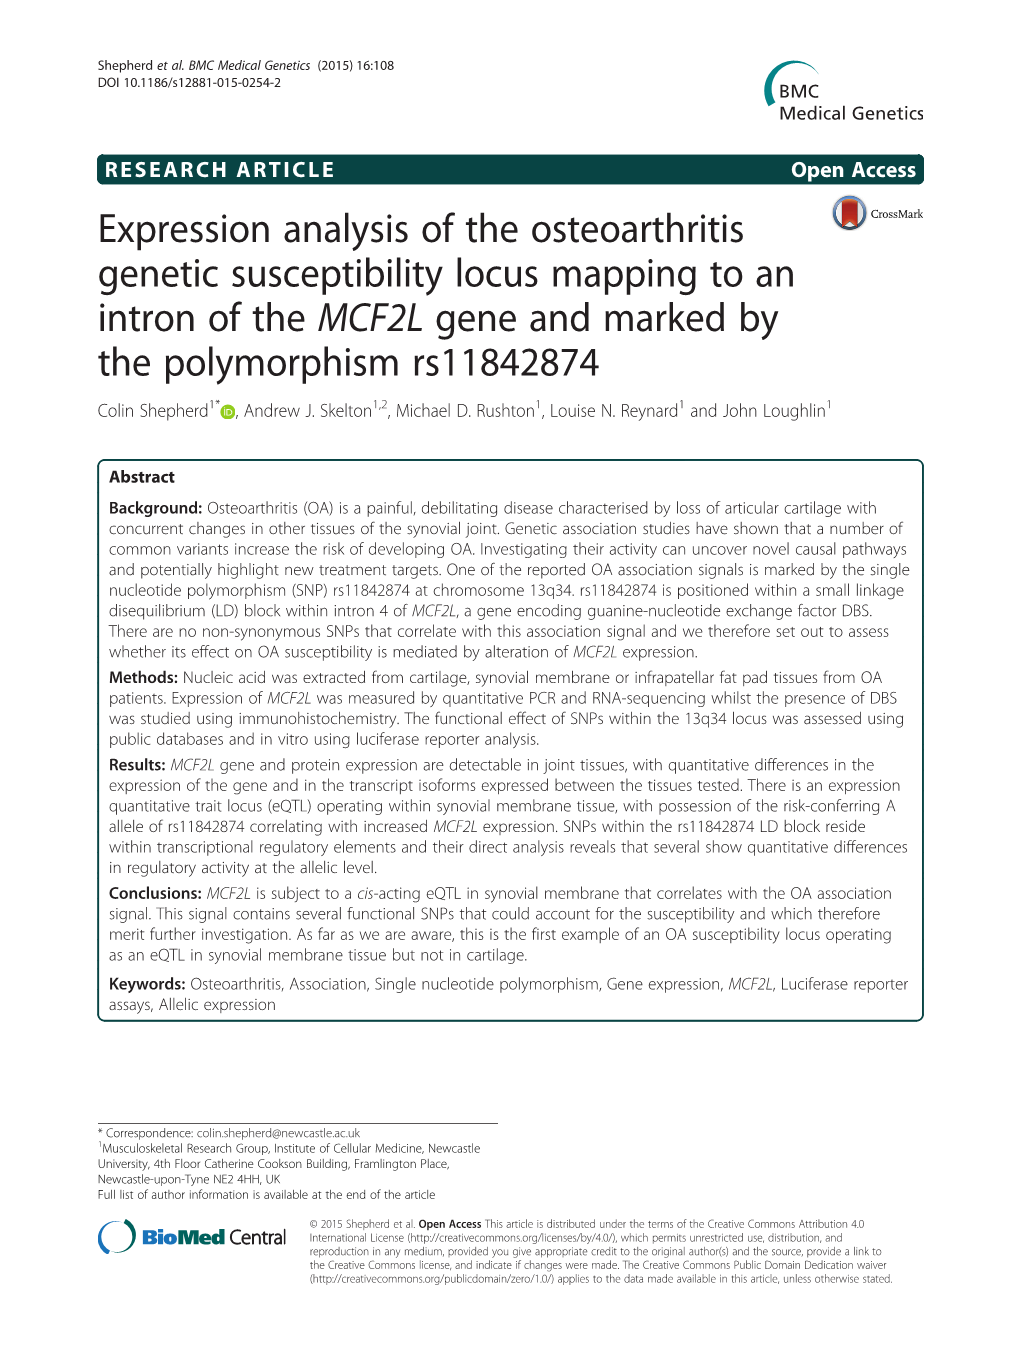 Expression Analysis of the Osteoarthritis